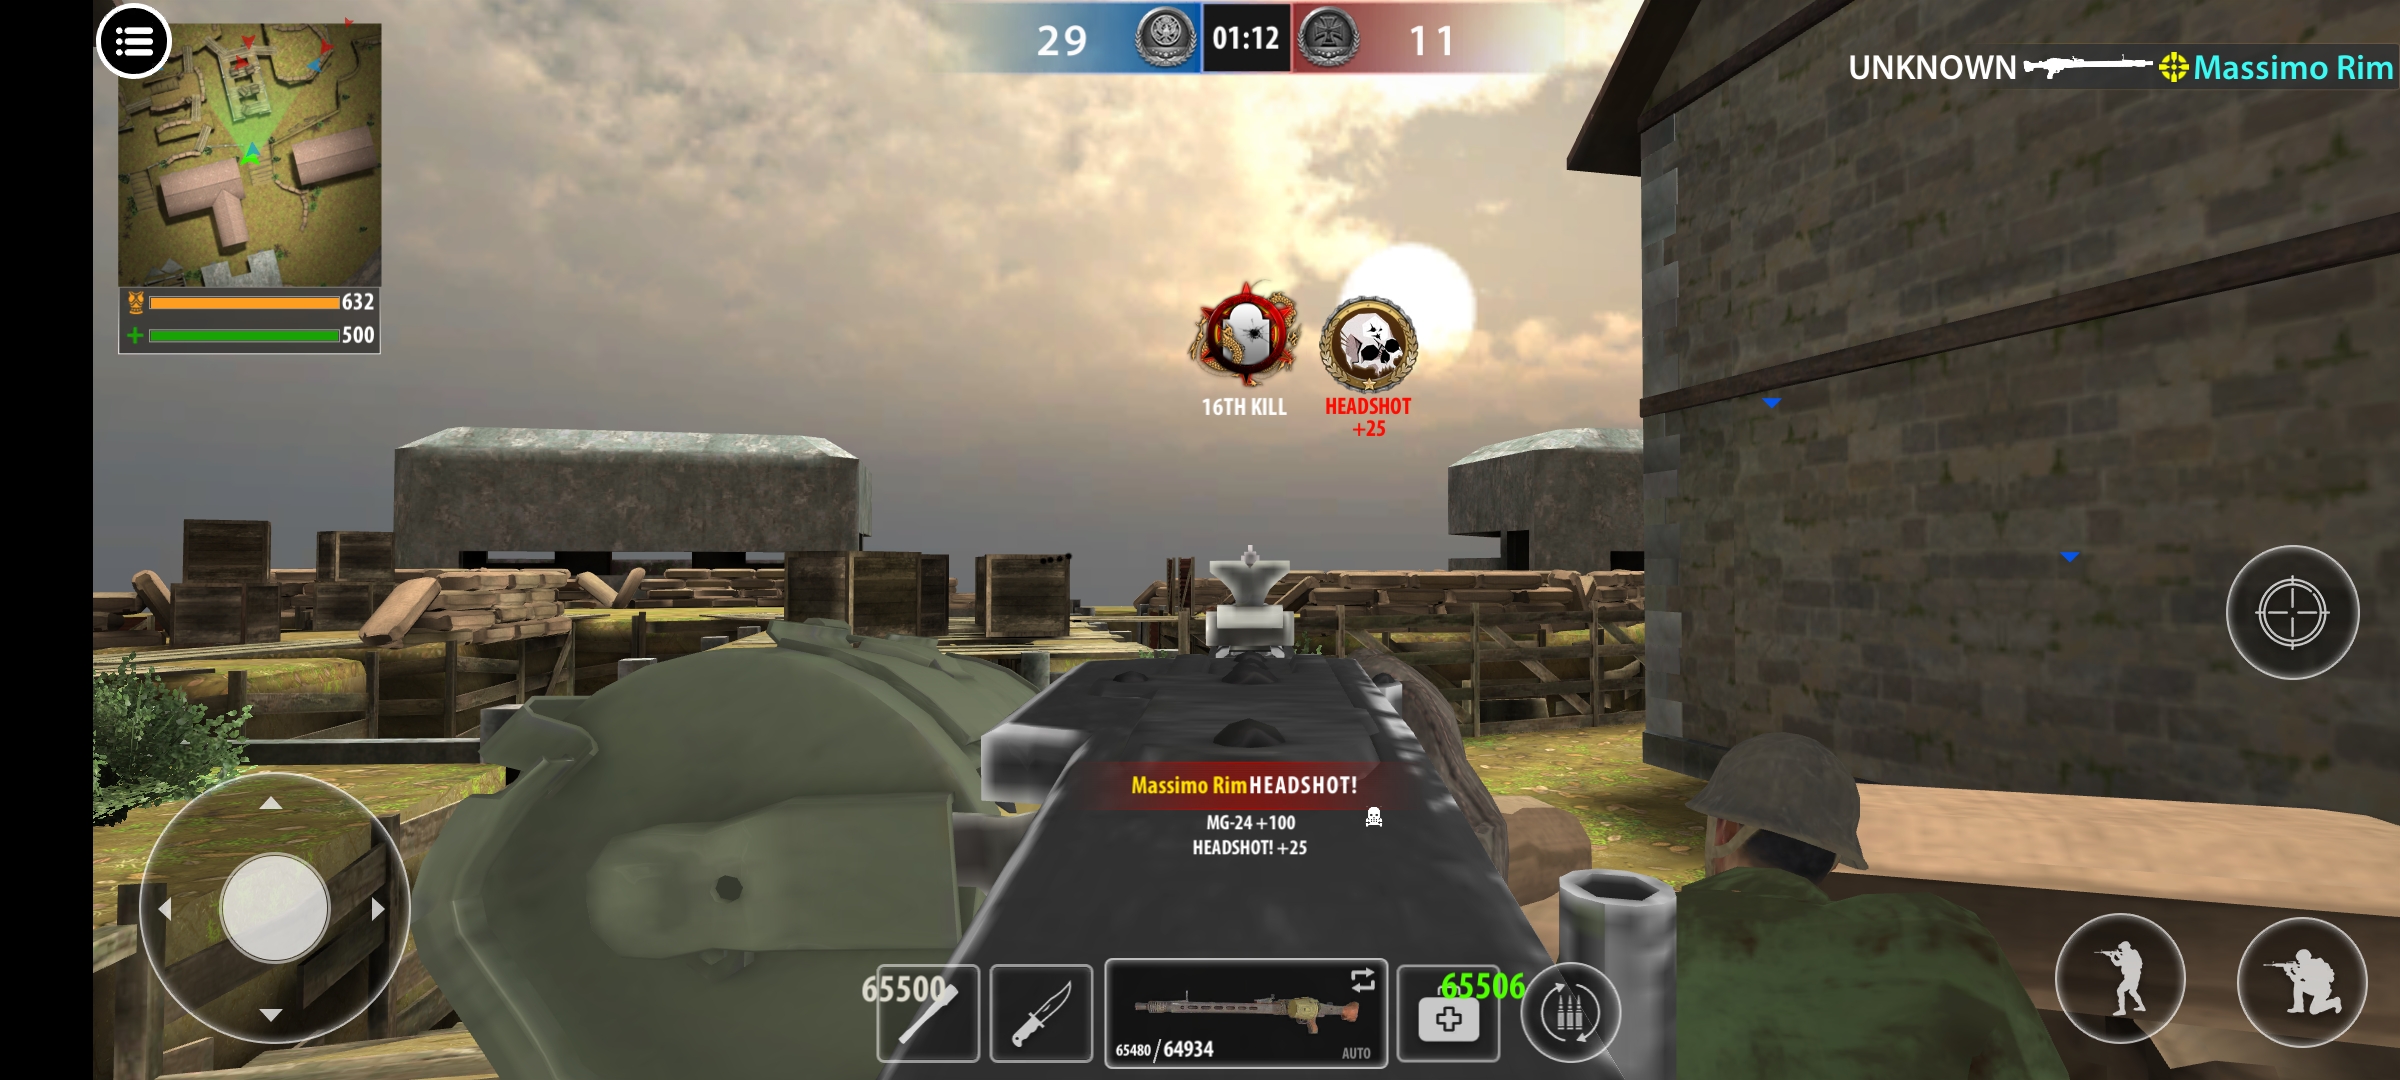 Game World War 2 Reborn Cho Android